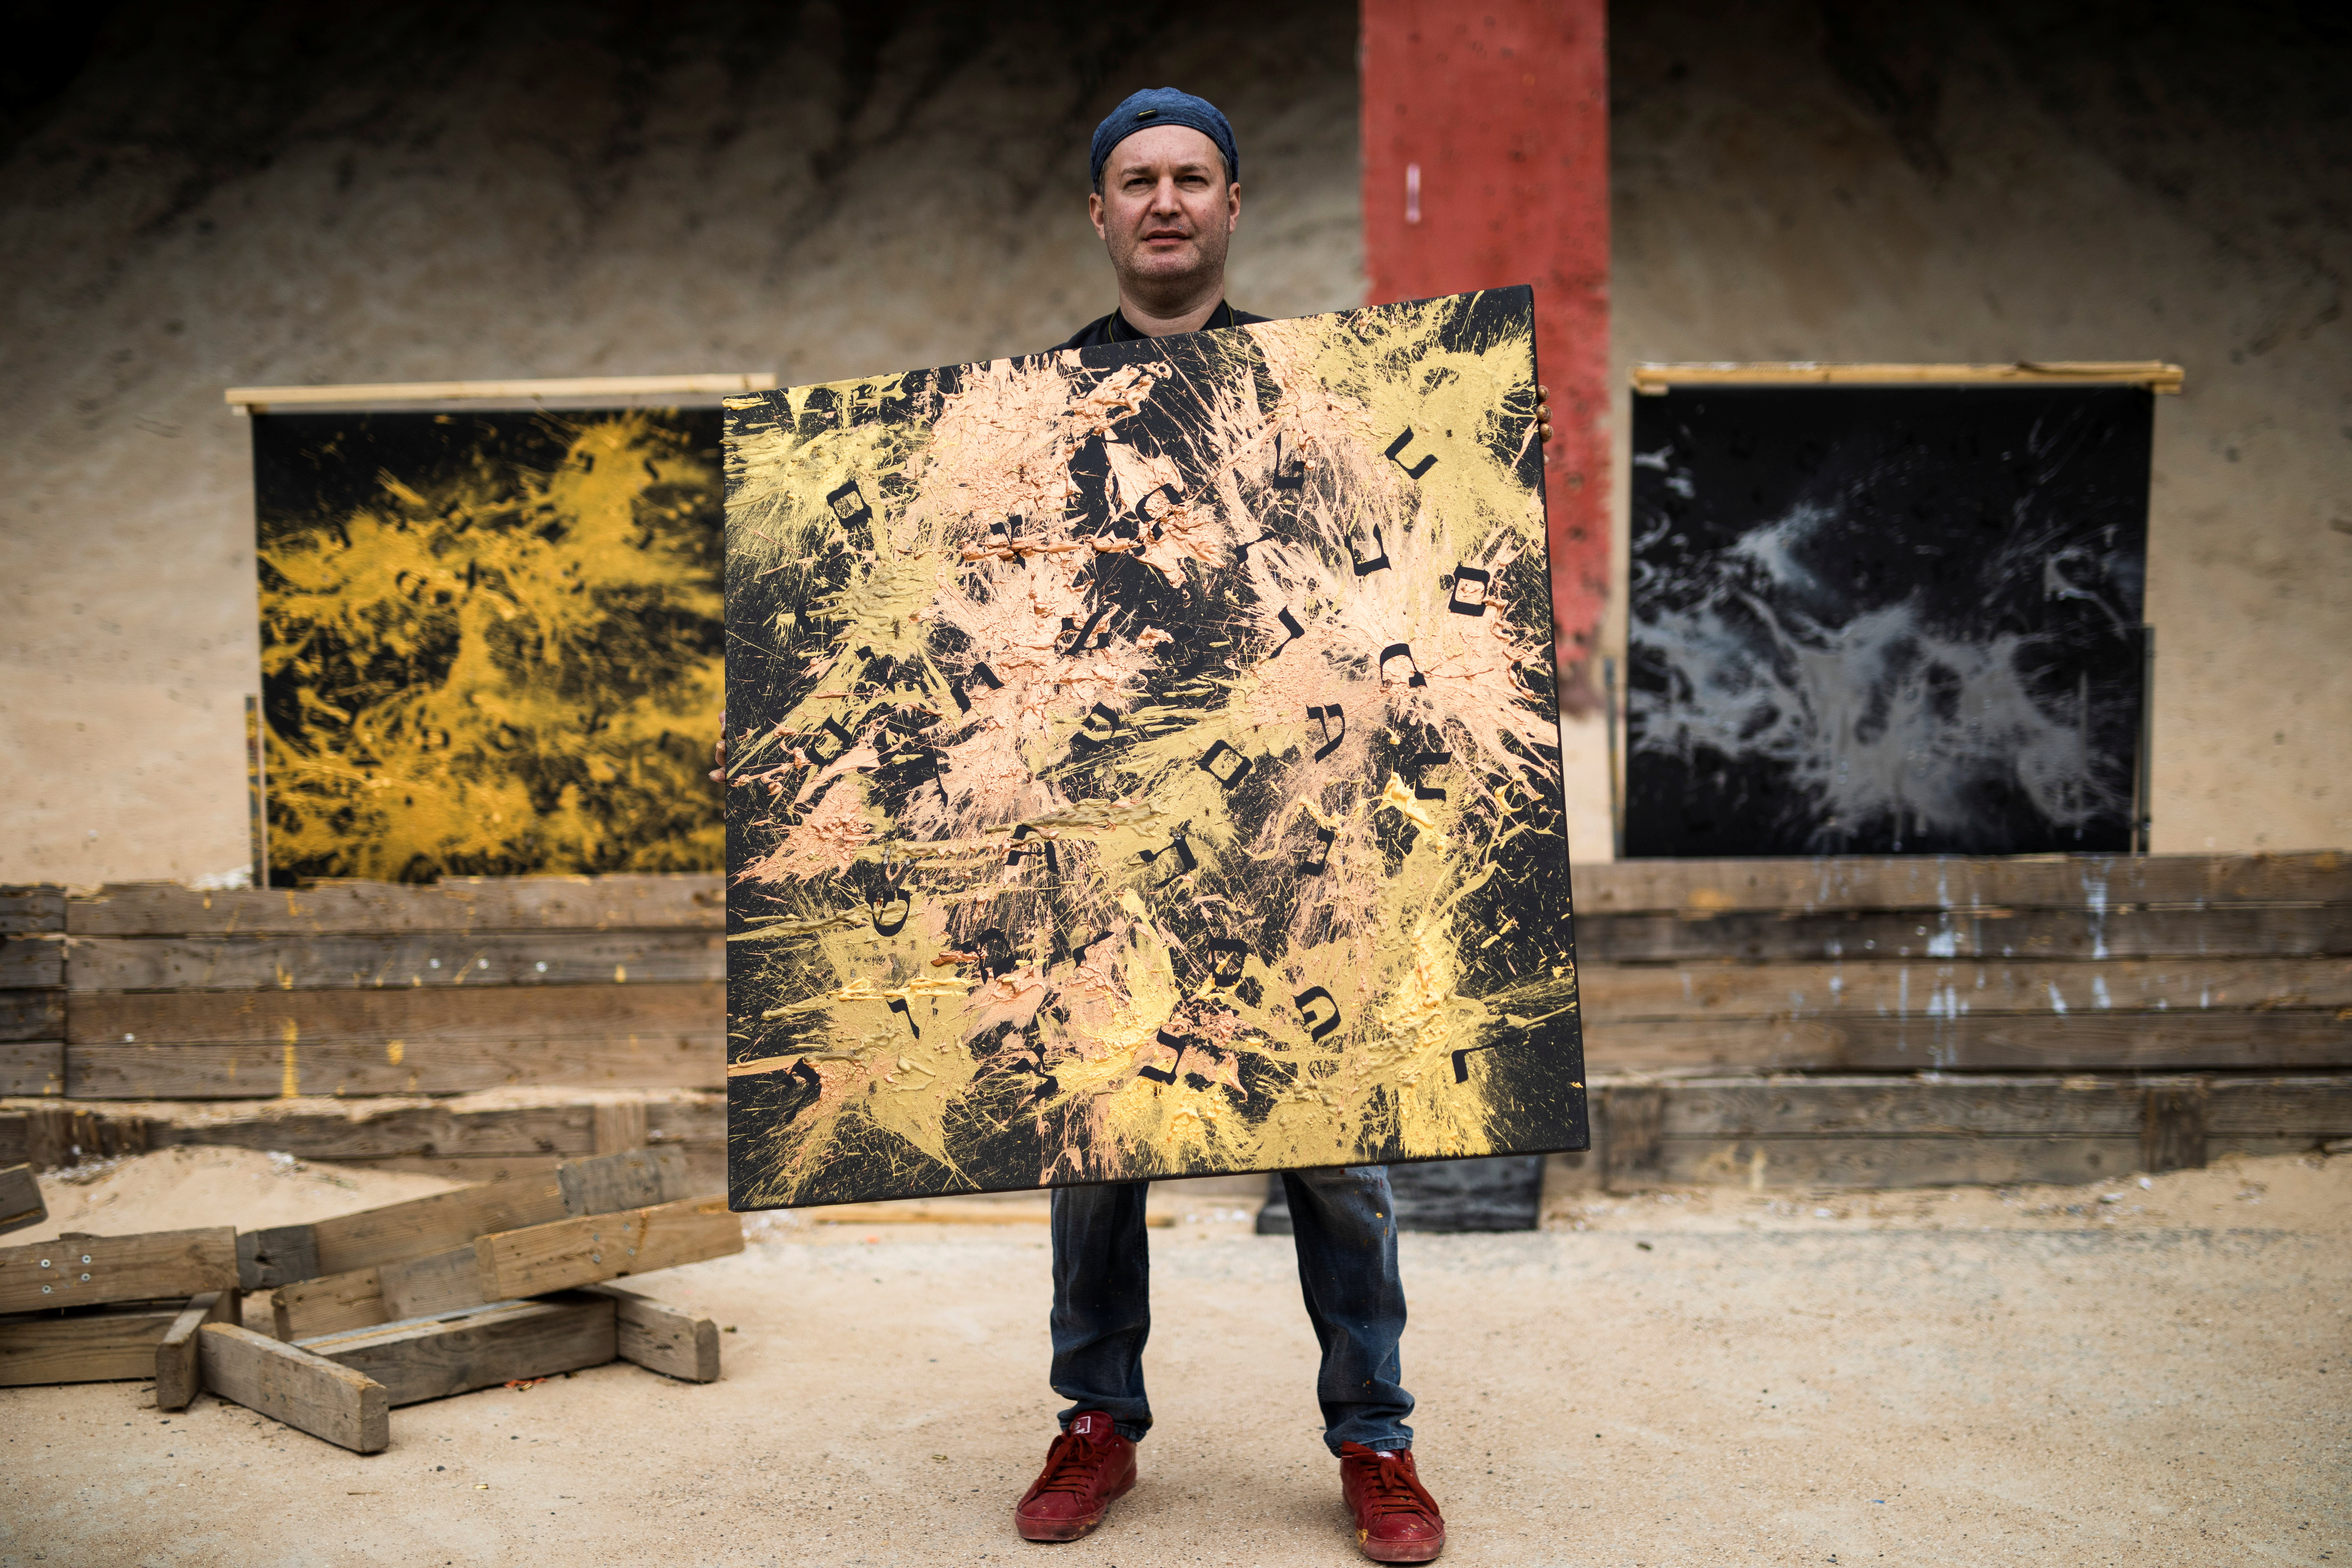 Art attack: Israeli ex-sniper blasts paint in mental-health message